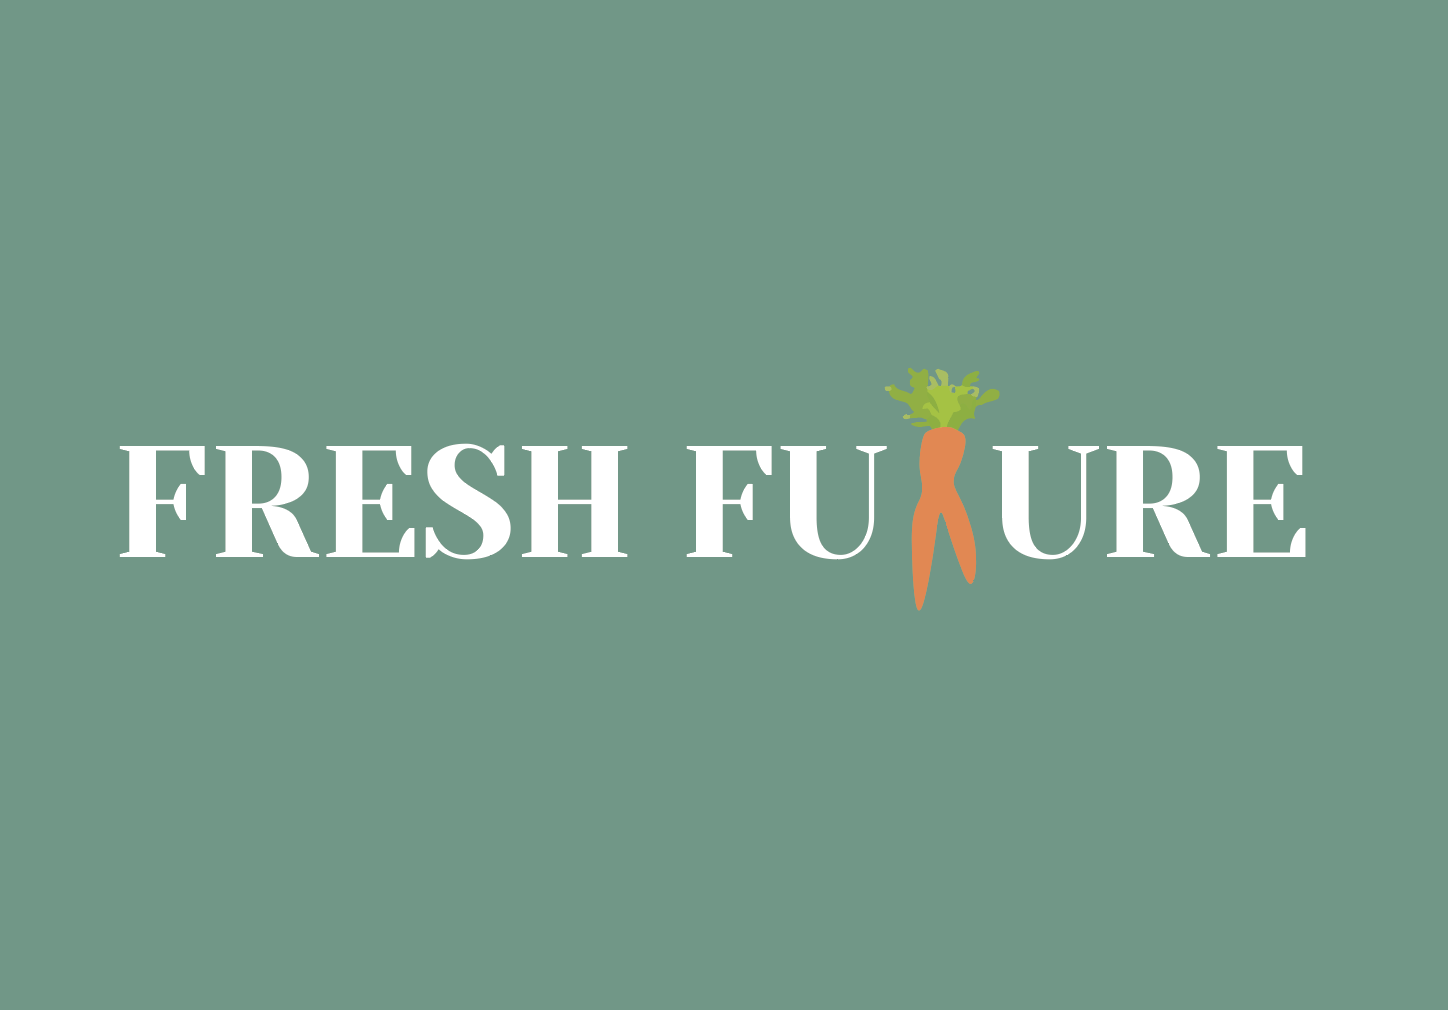 Fresh Future a community based Farm Shop designed to reduce food waste.